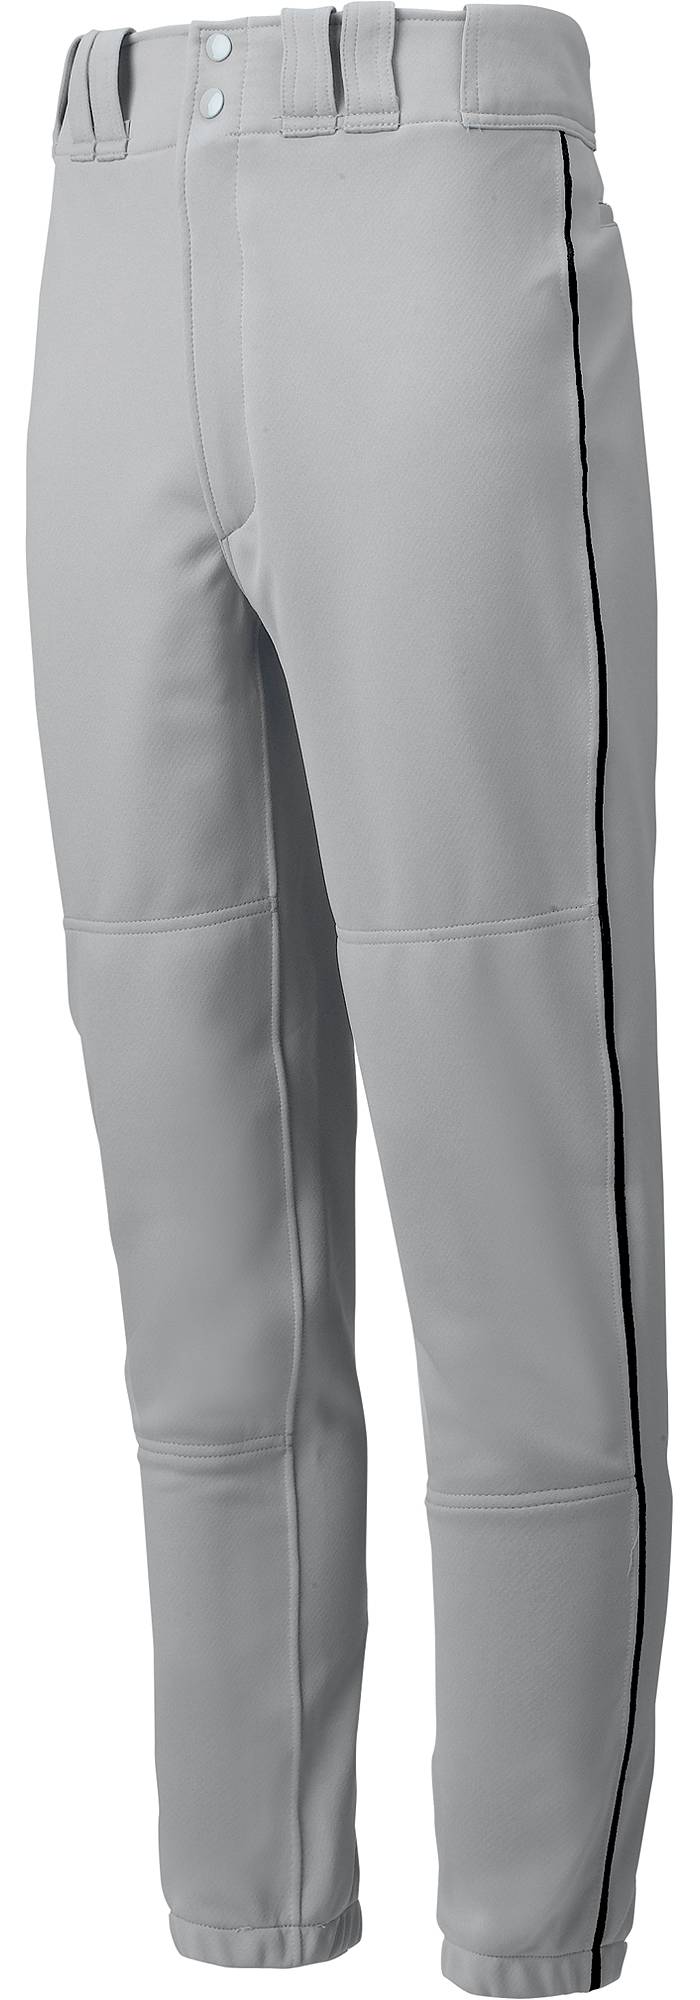 New Bike Athletic Pinstripe Baseball Pants, Gray/Black, Adult XL